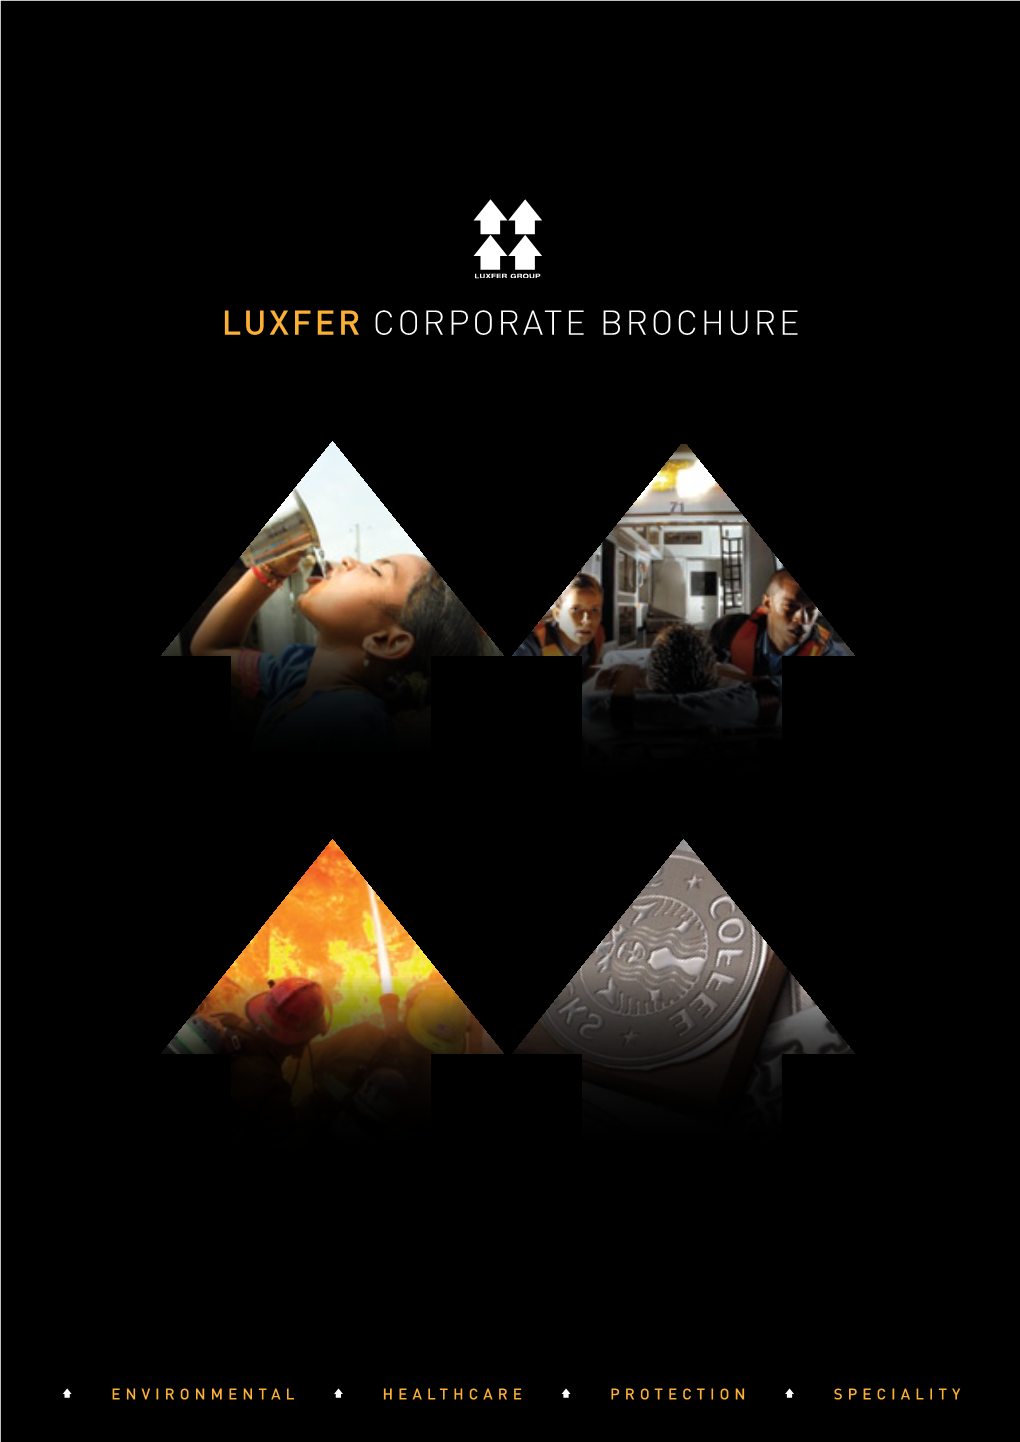 LUXFER Corporate Brochure